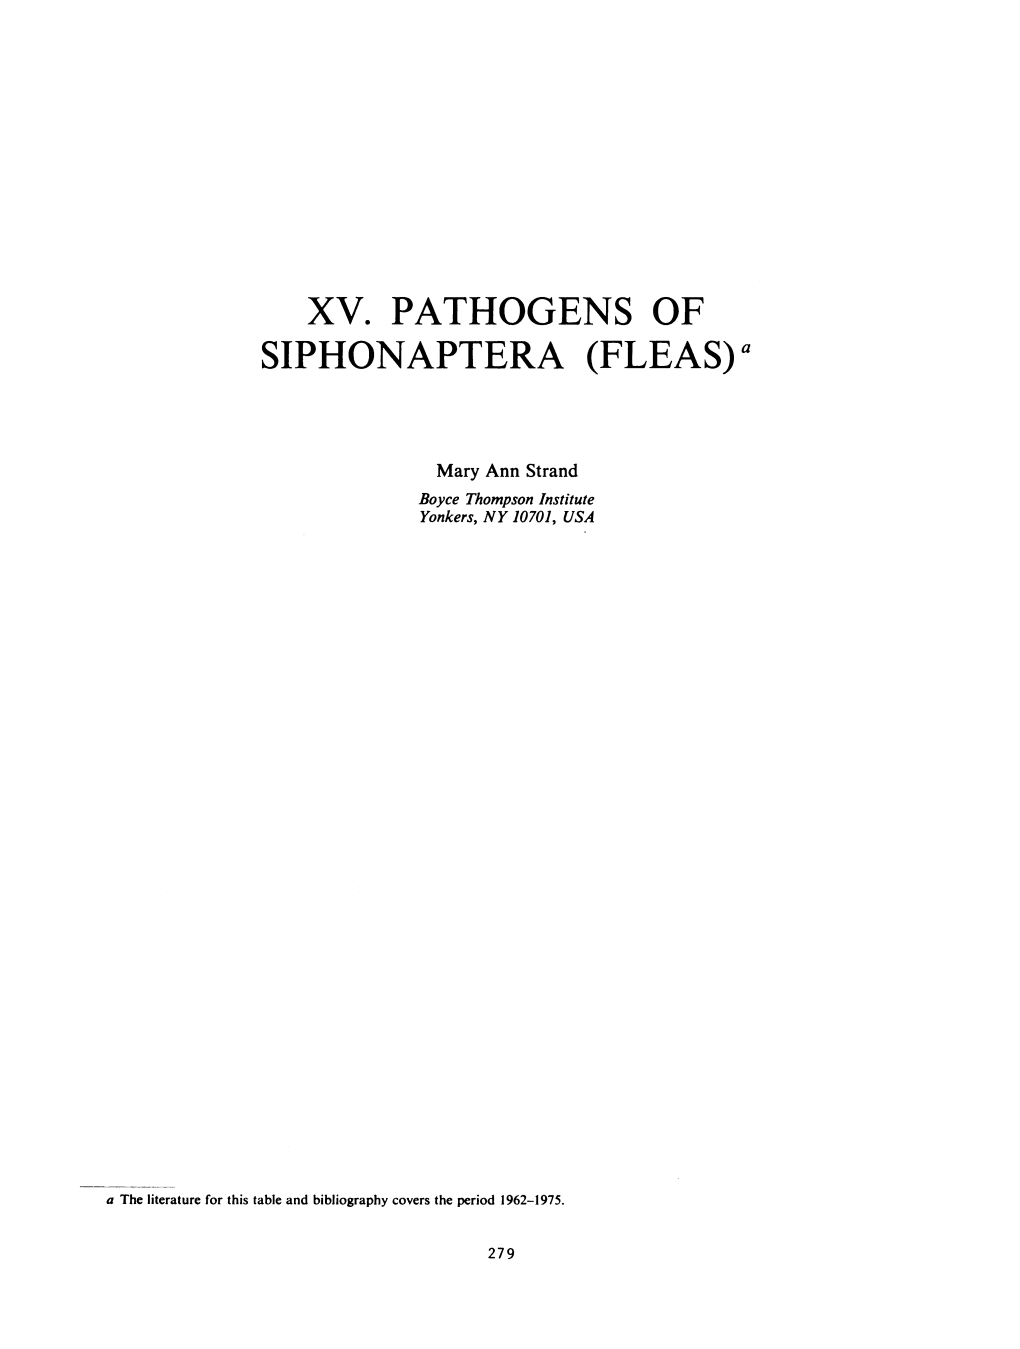 XV. PATHOGENS of SIPHONAPTERA (FLEAS)A